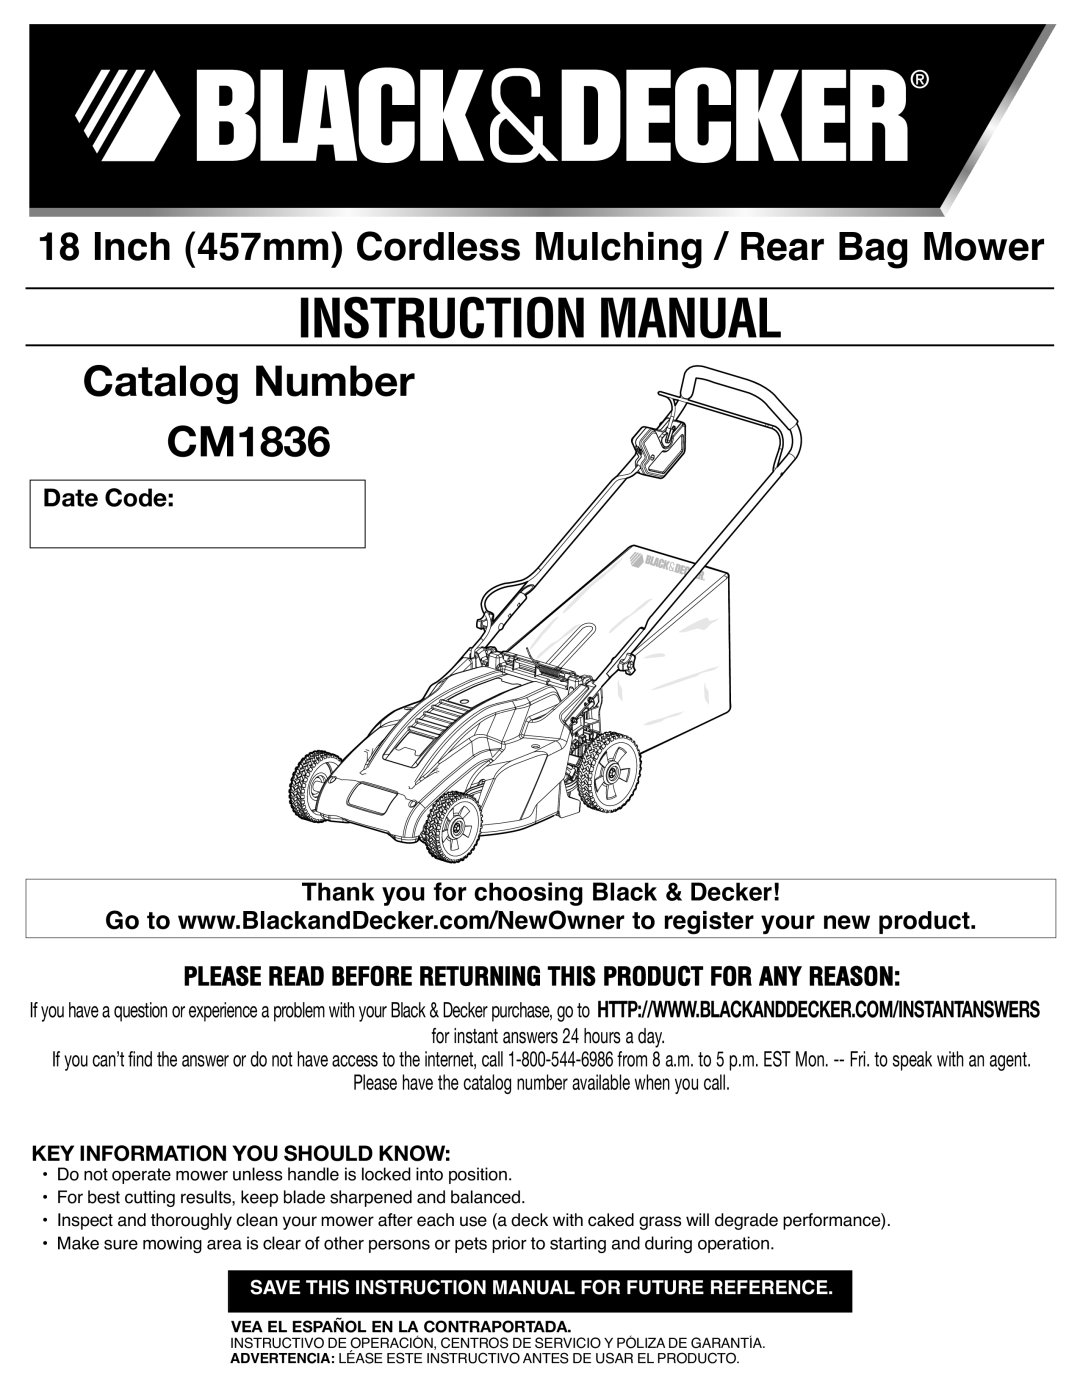 Black & Decker CM1836R instruction manual Instructionmanual, Catalog Number CM1836, Thank youforchoosing Black & Decker 